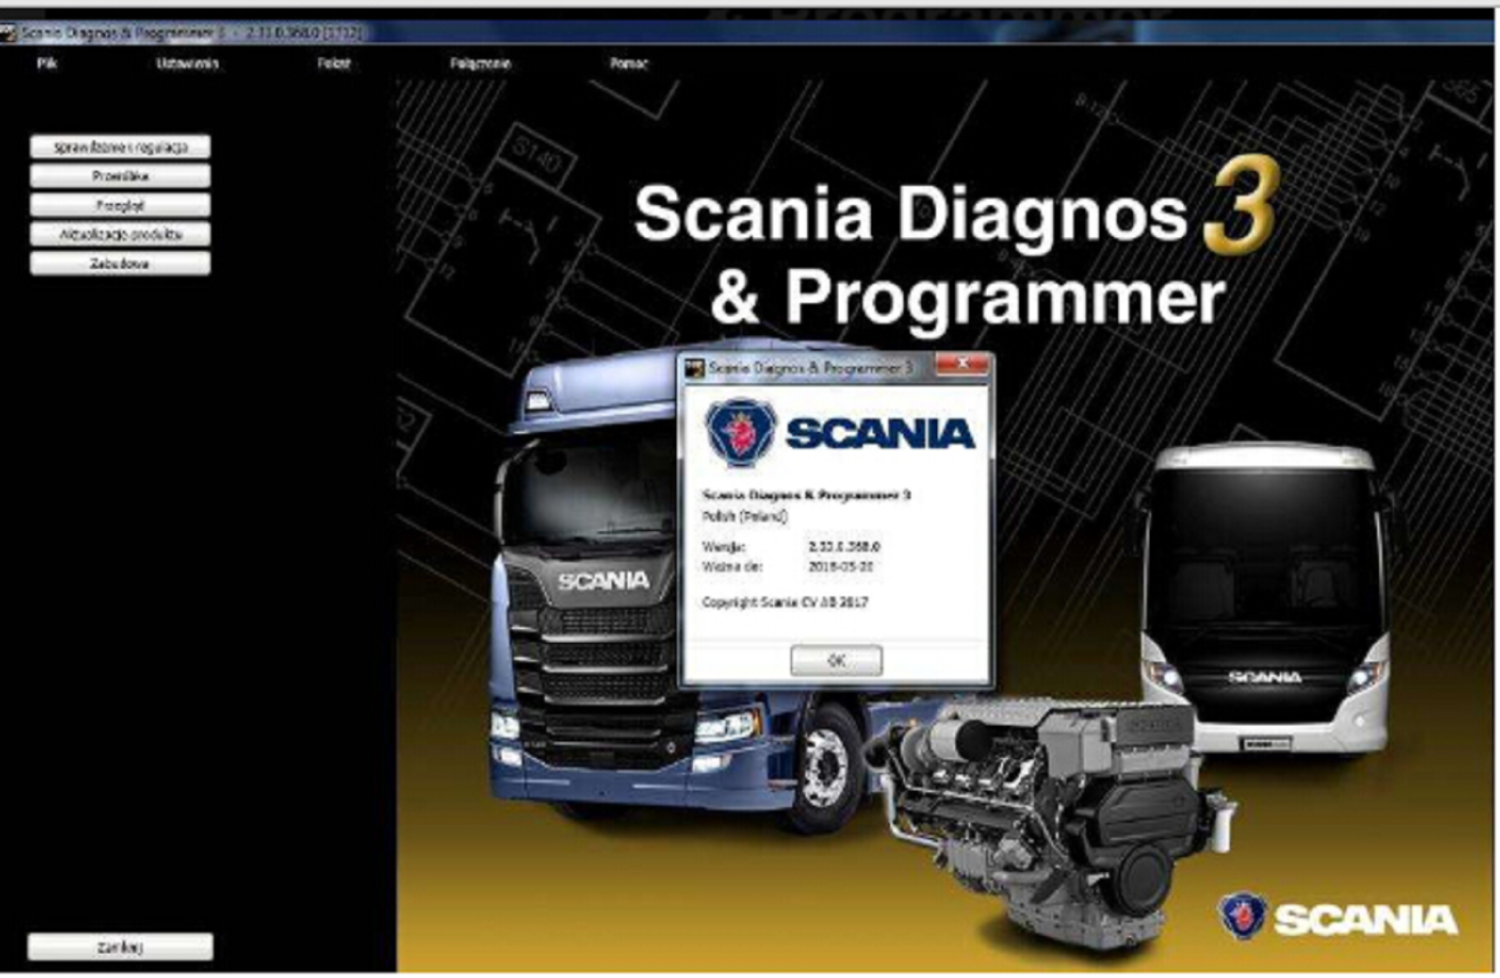 Scania SPD3 v2.50.1 12.2021 für LKW/Bus-Diagnoseprogrammiersoftware + Keygen